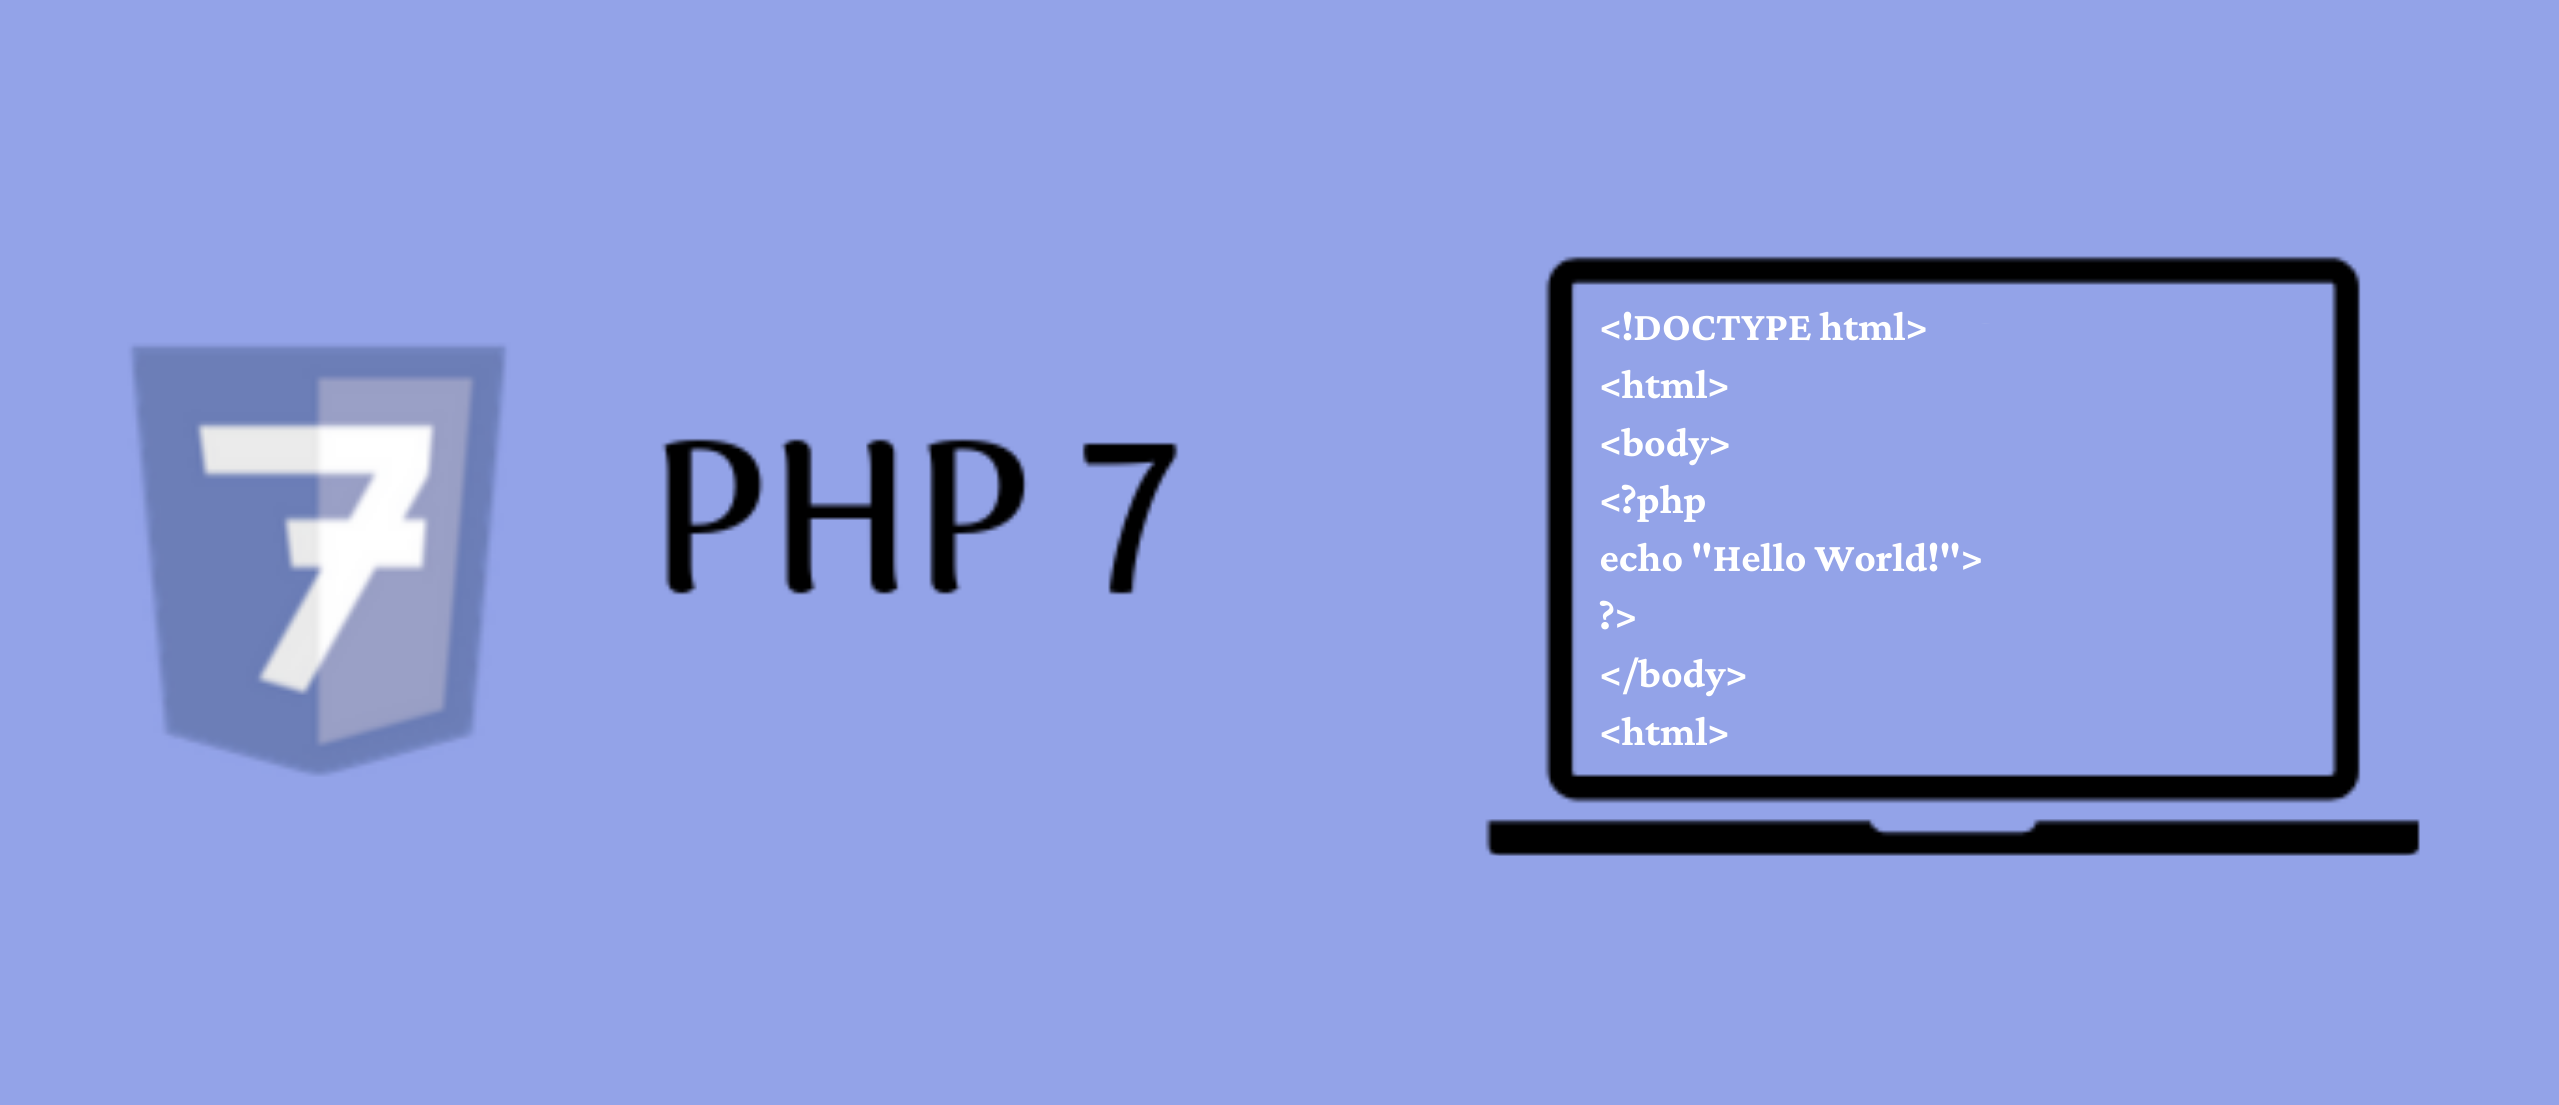 PHP Vs Print - CodeRepublics